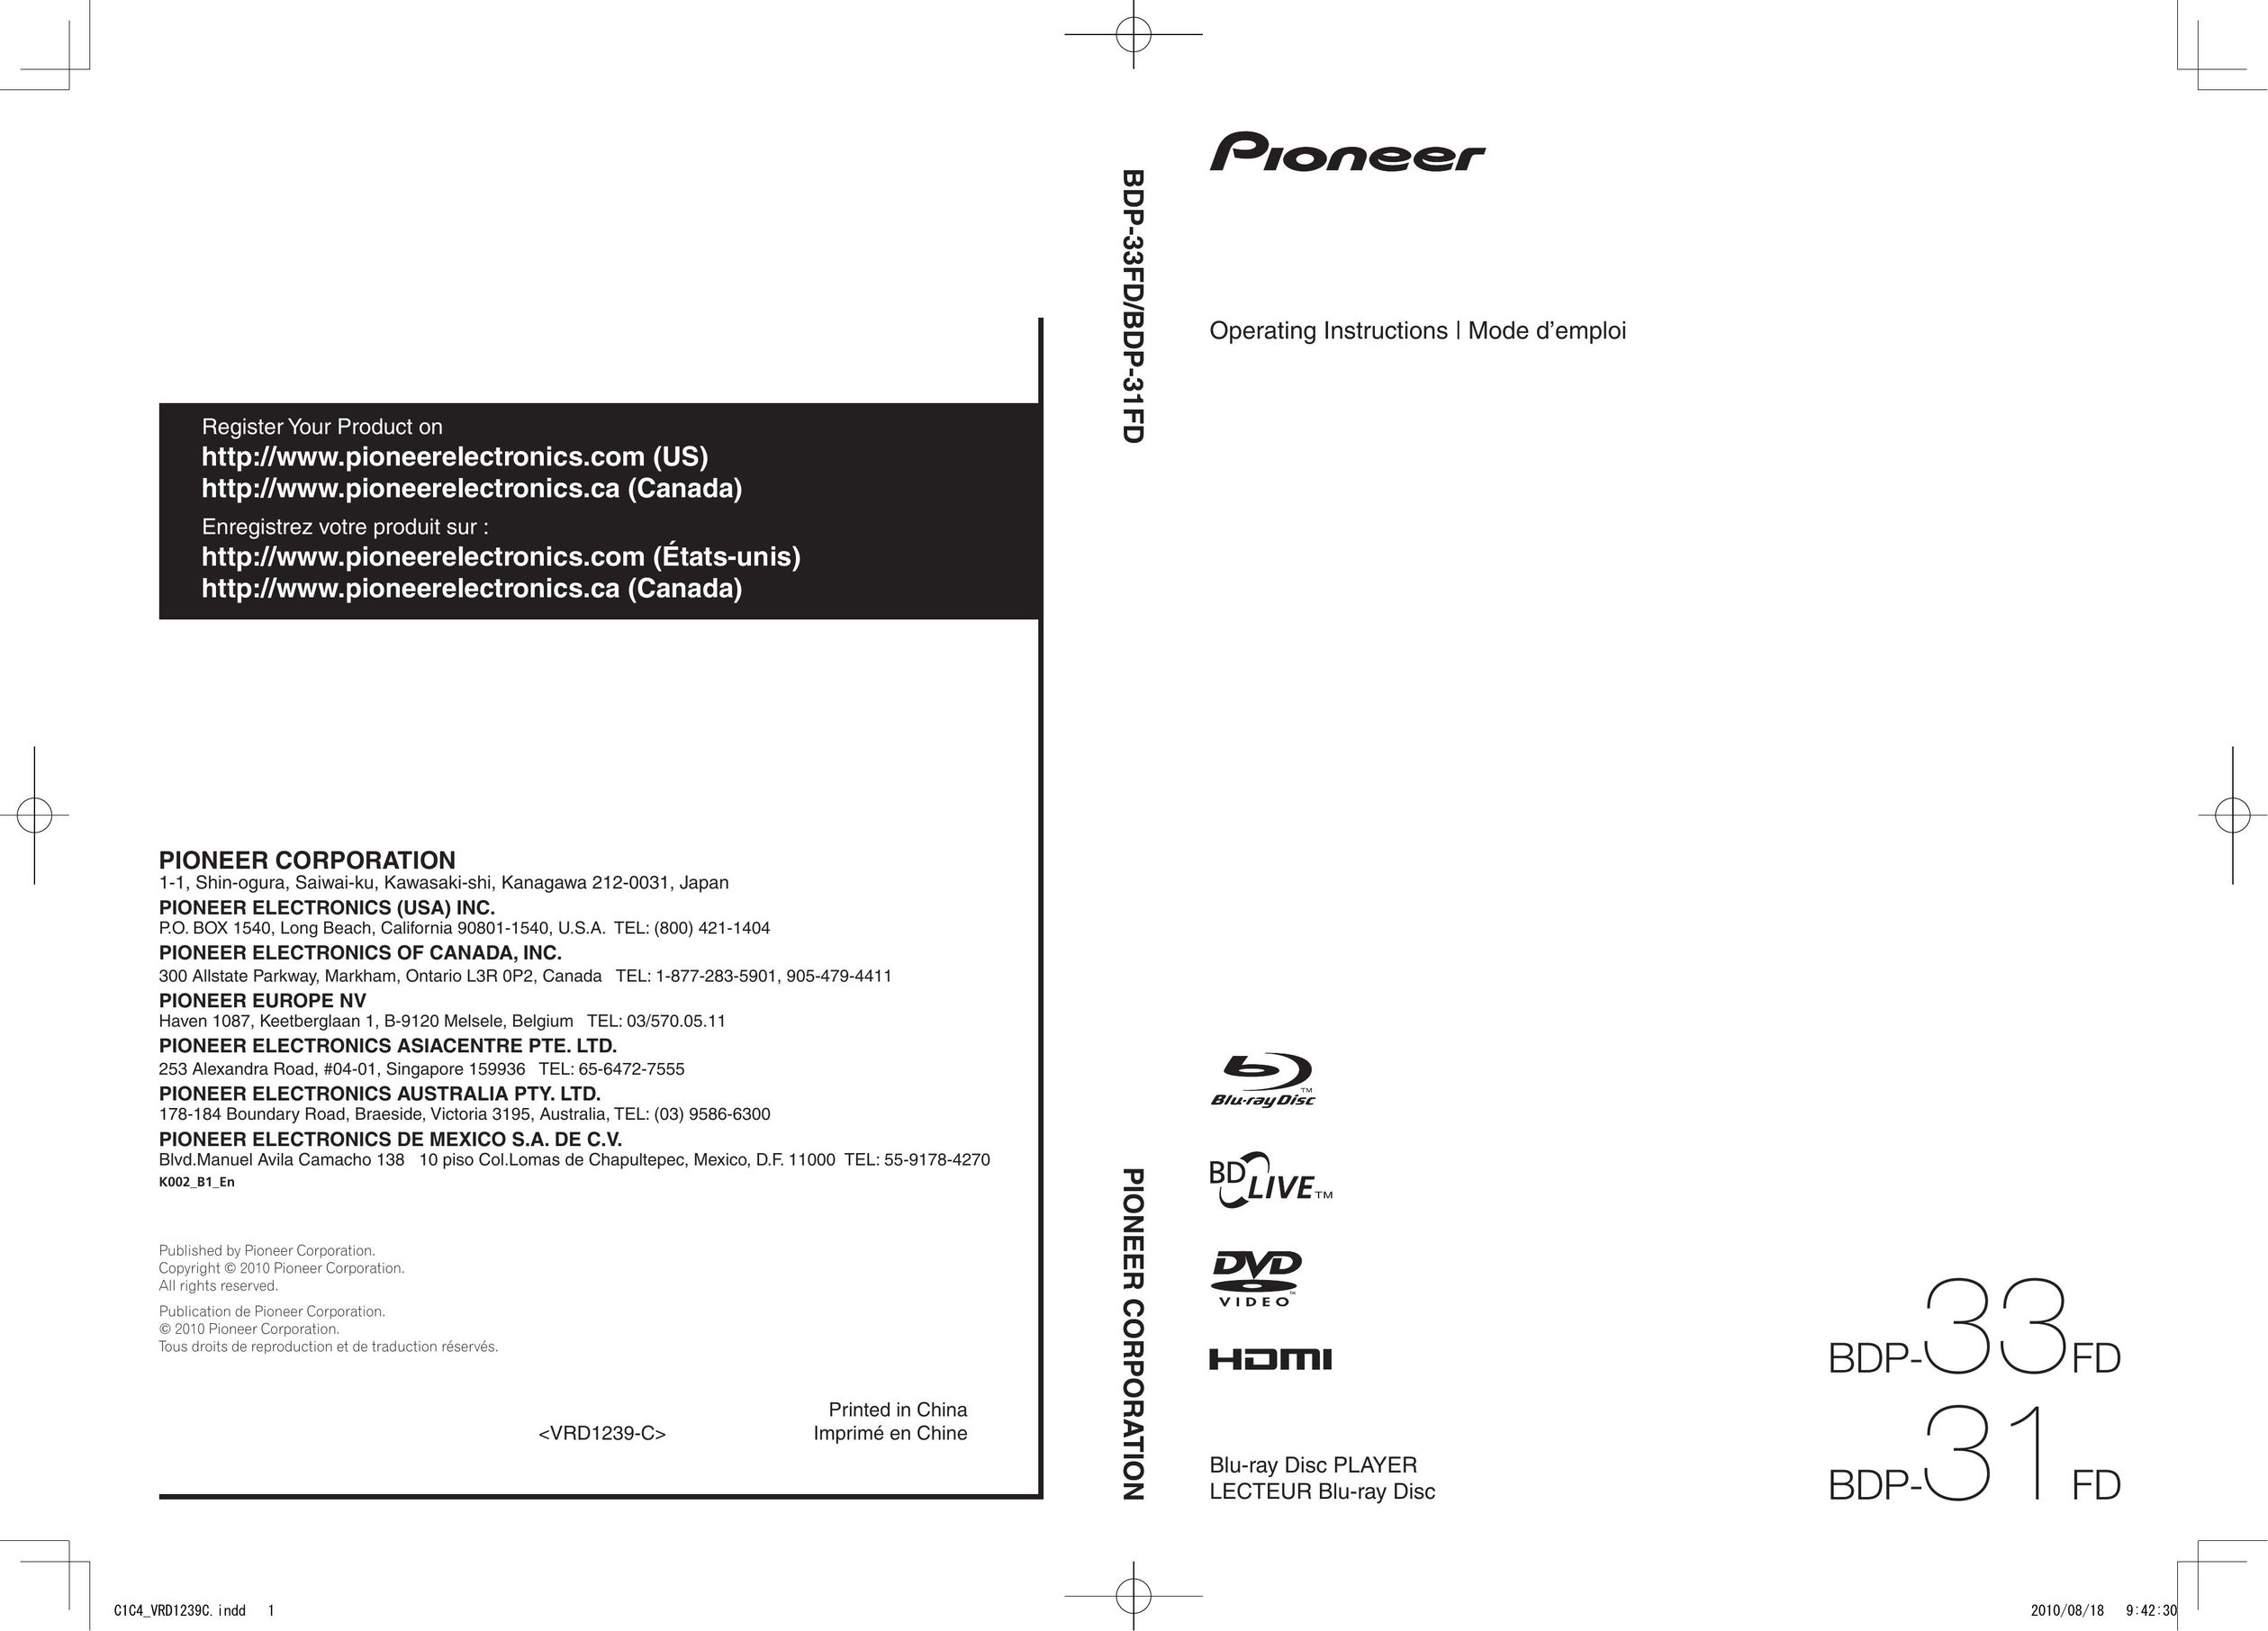 Pioneer BDP-31FD Bluetooth Headset User Manual